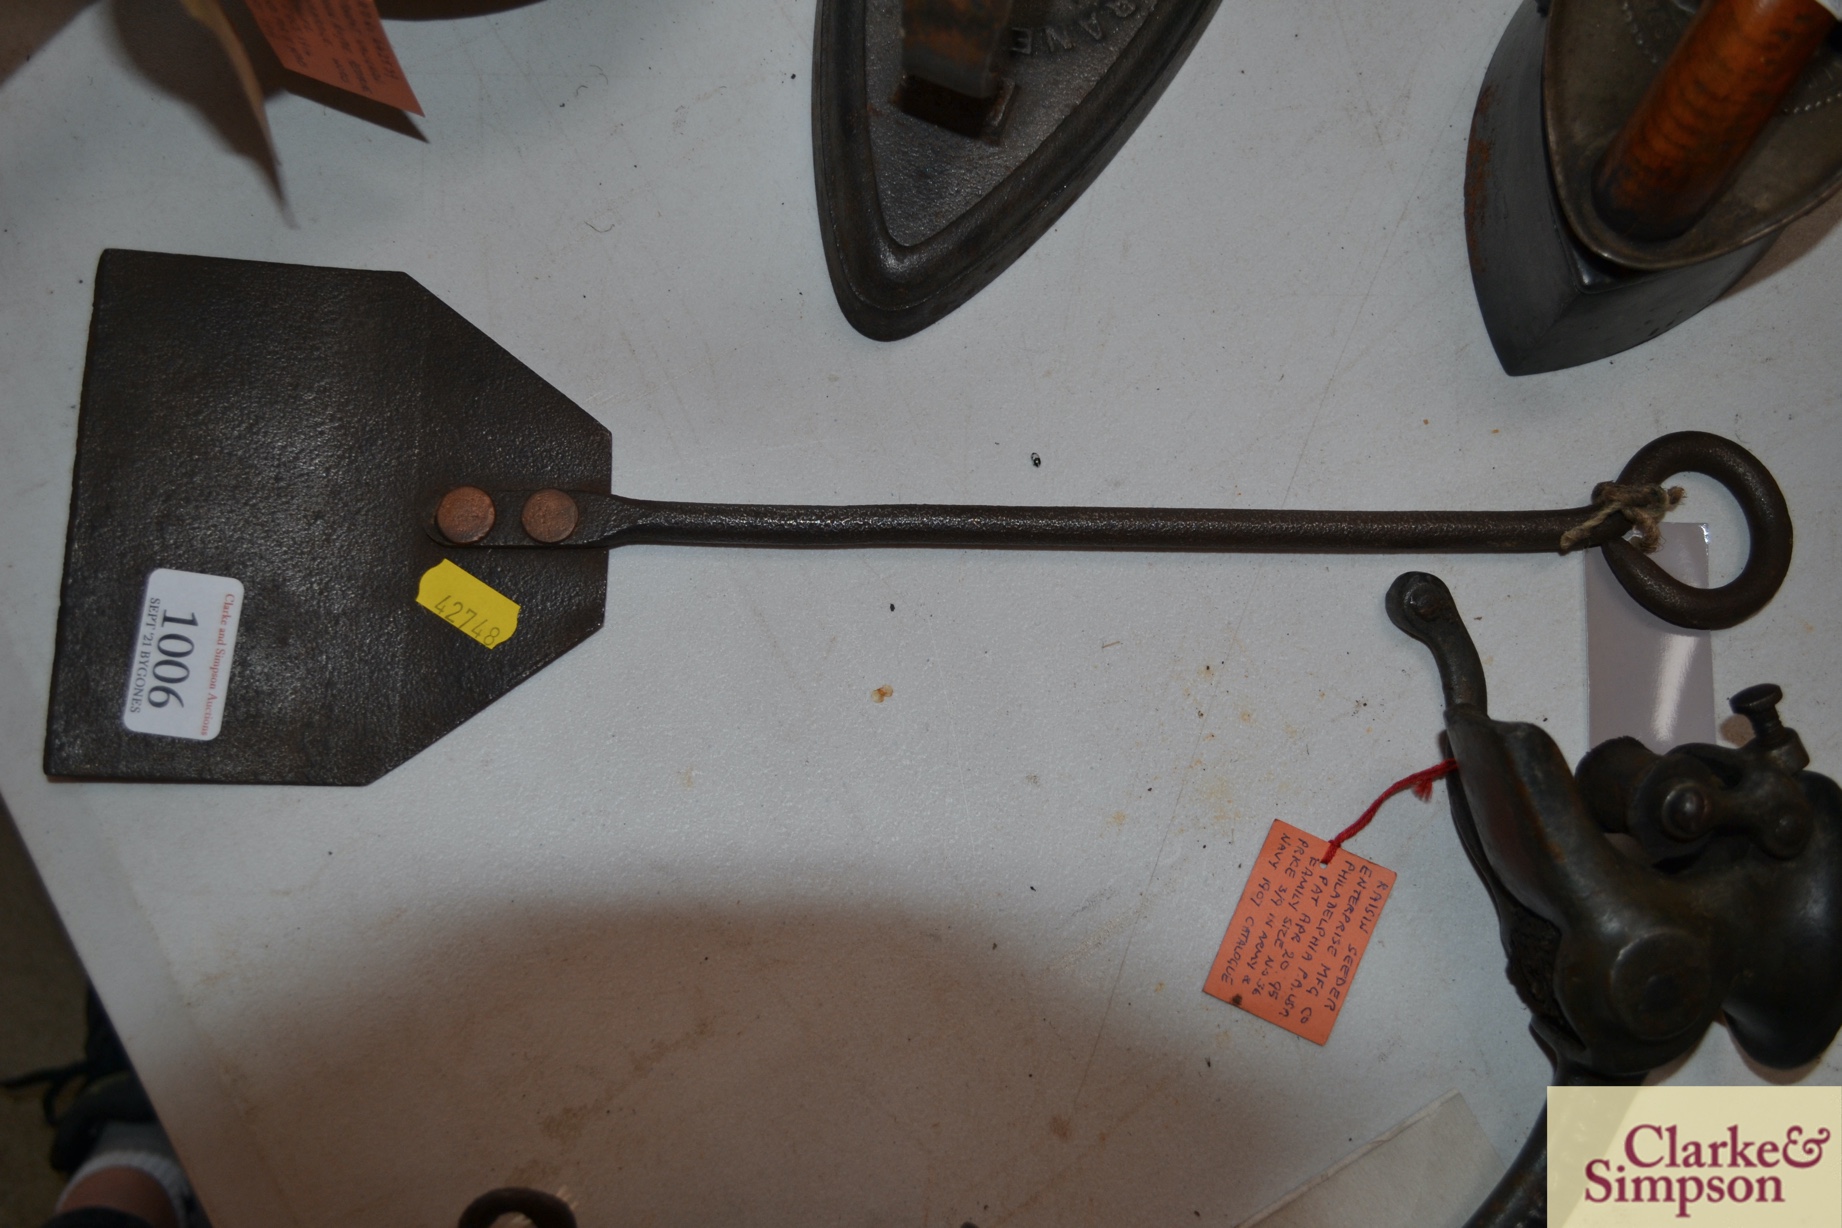 A vintage ironwork spatula